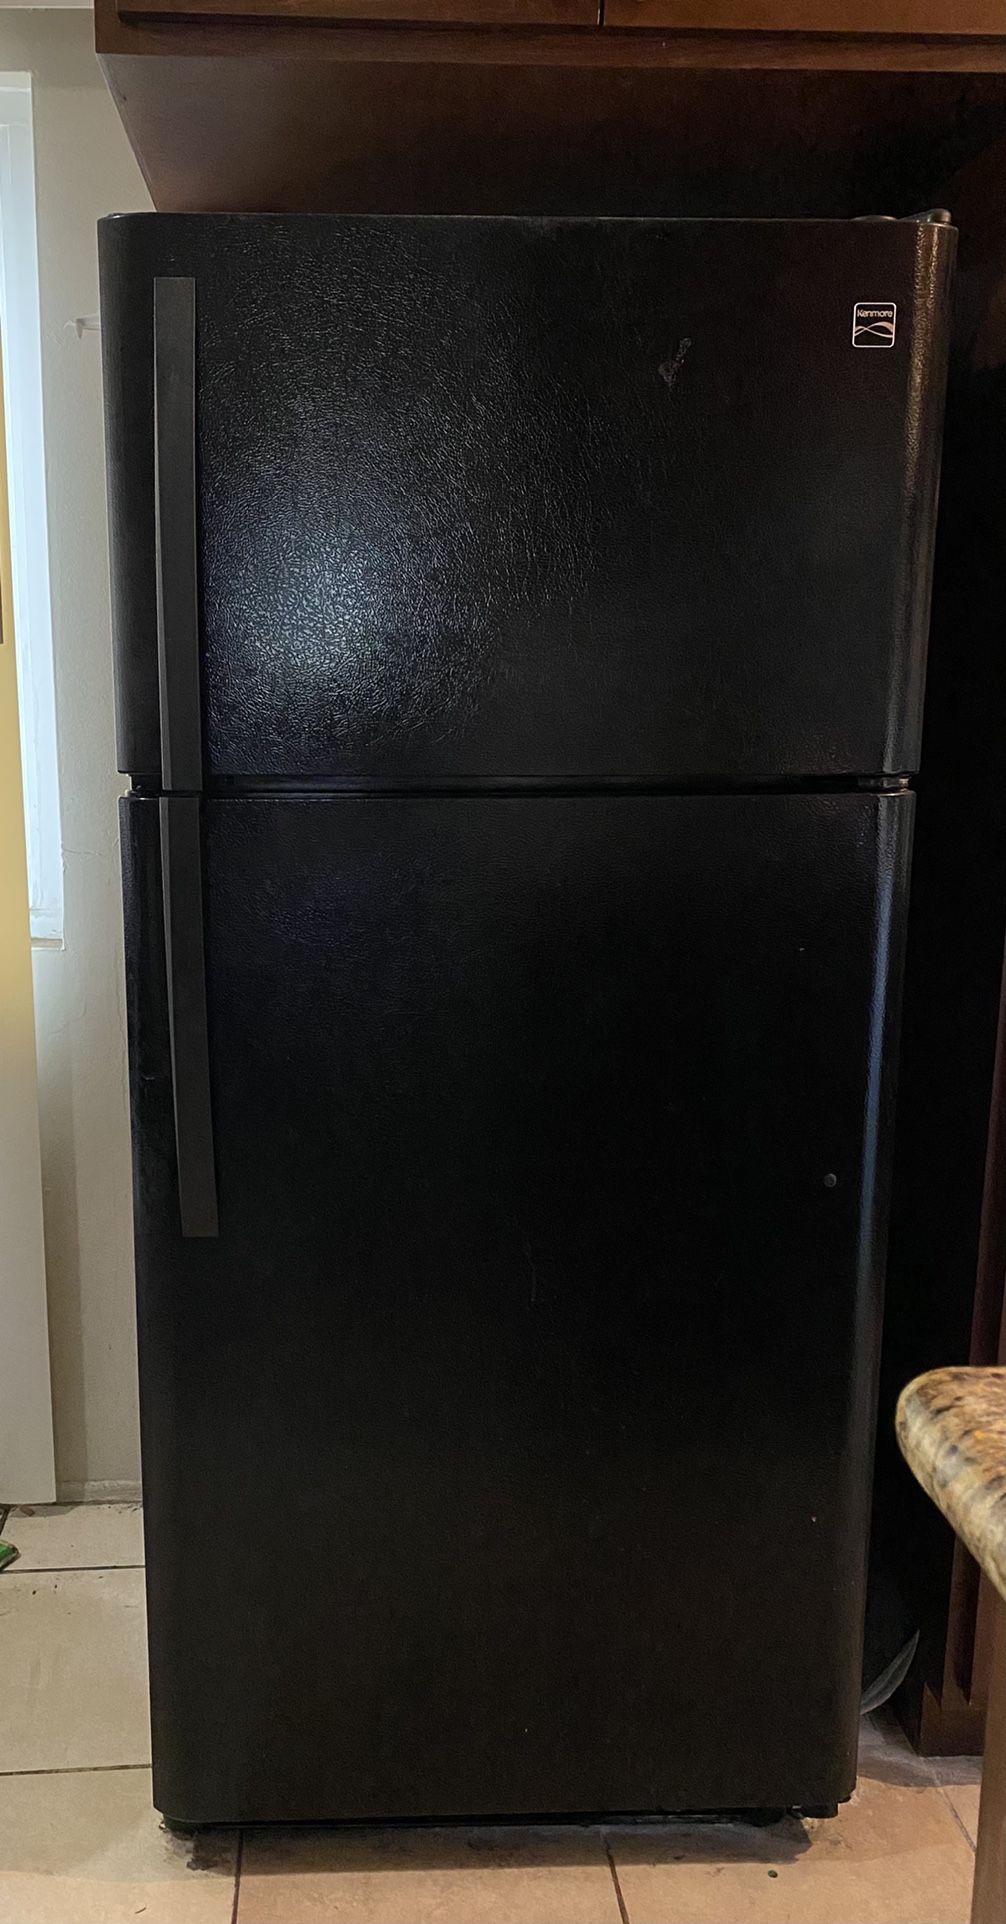 Black Kenmore Refrigerator